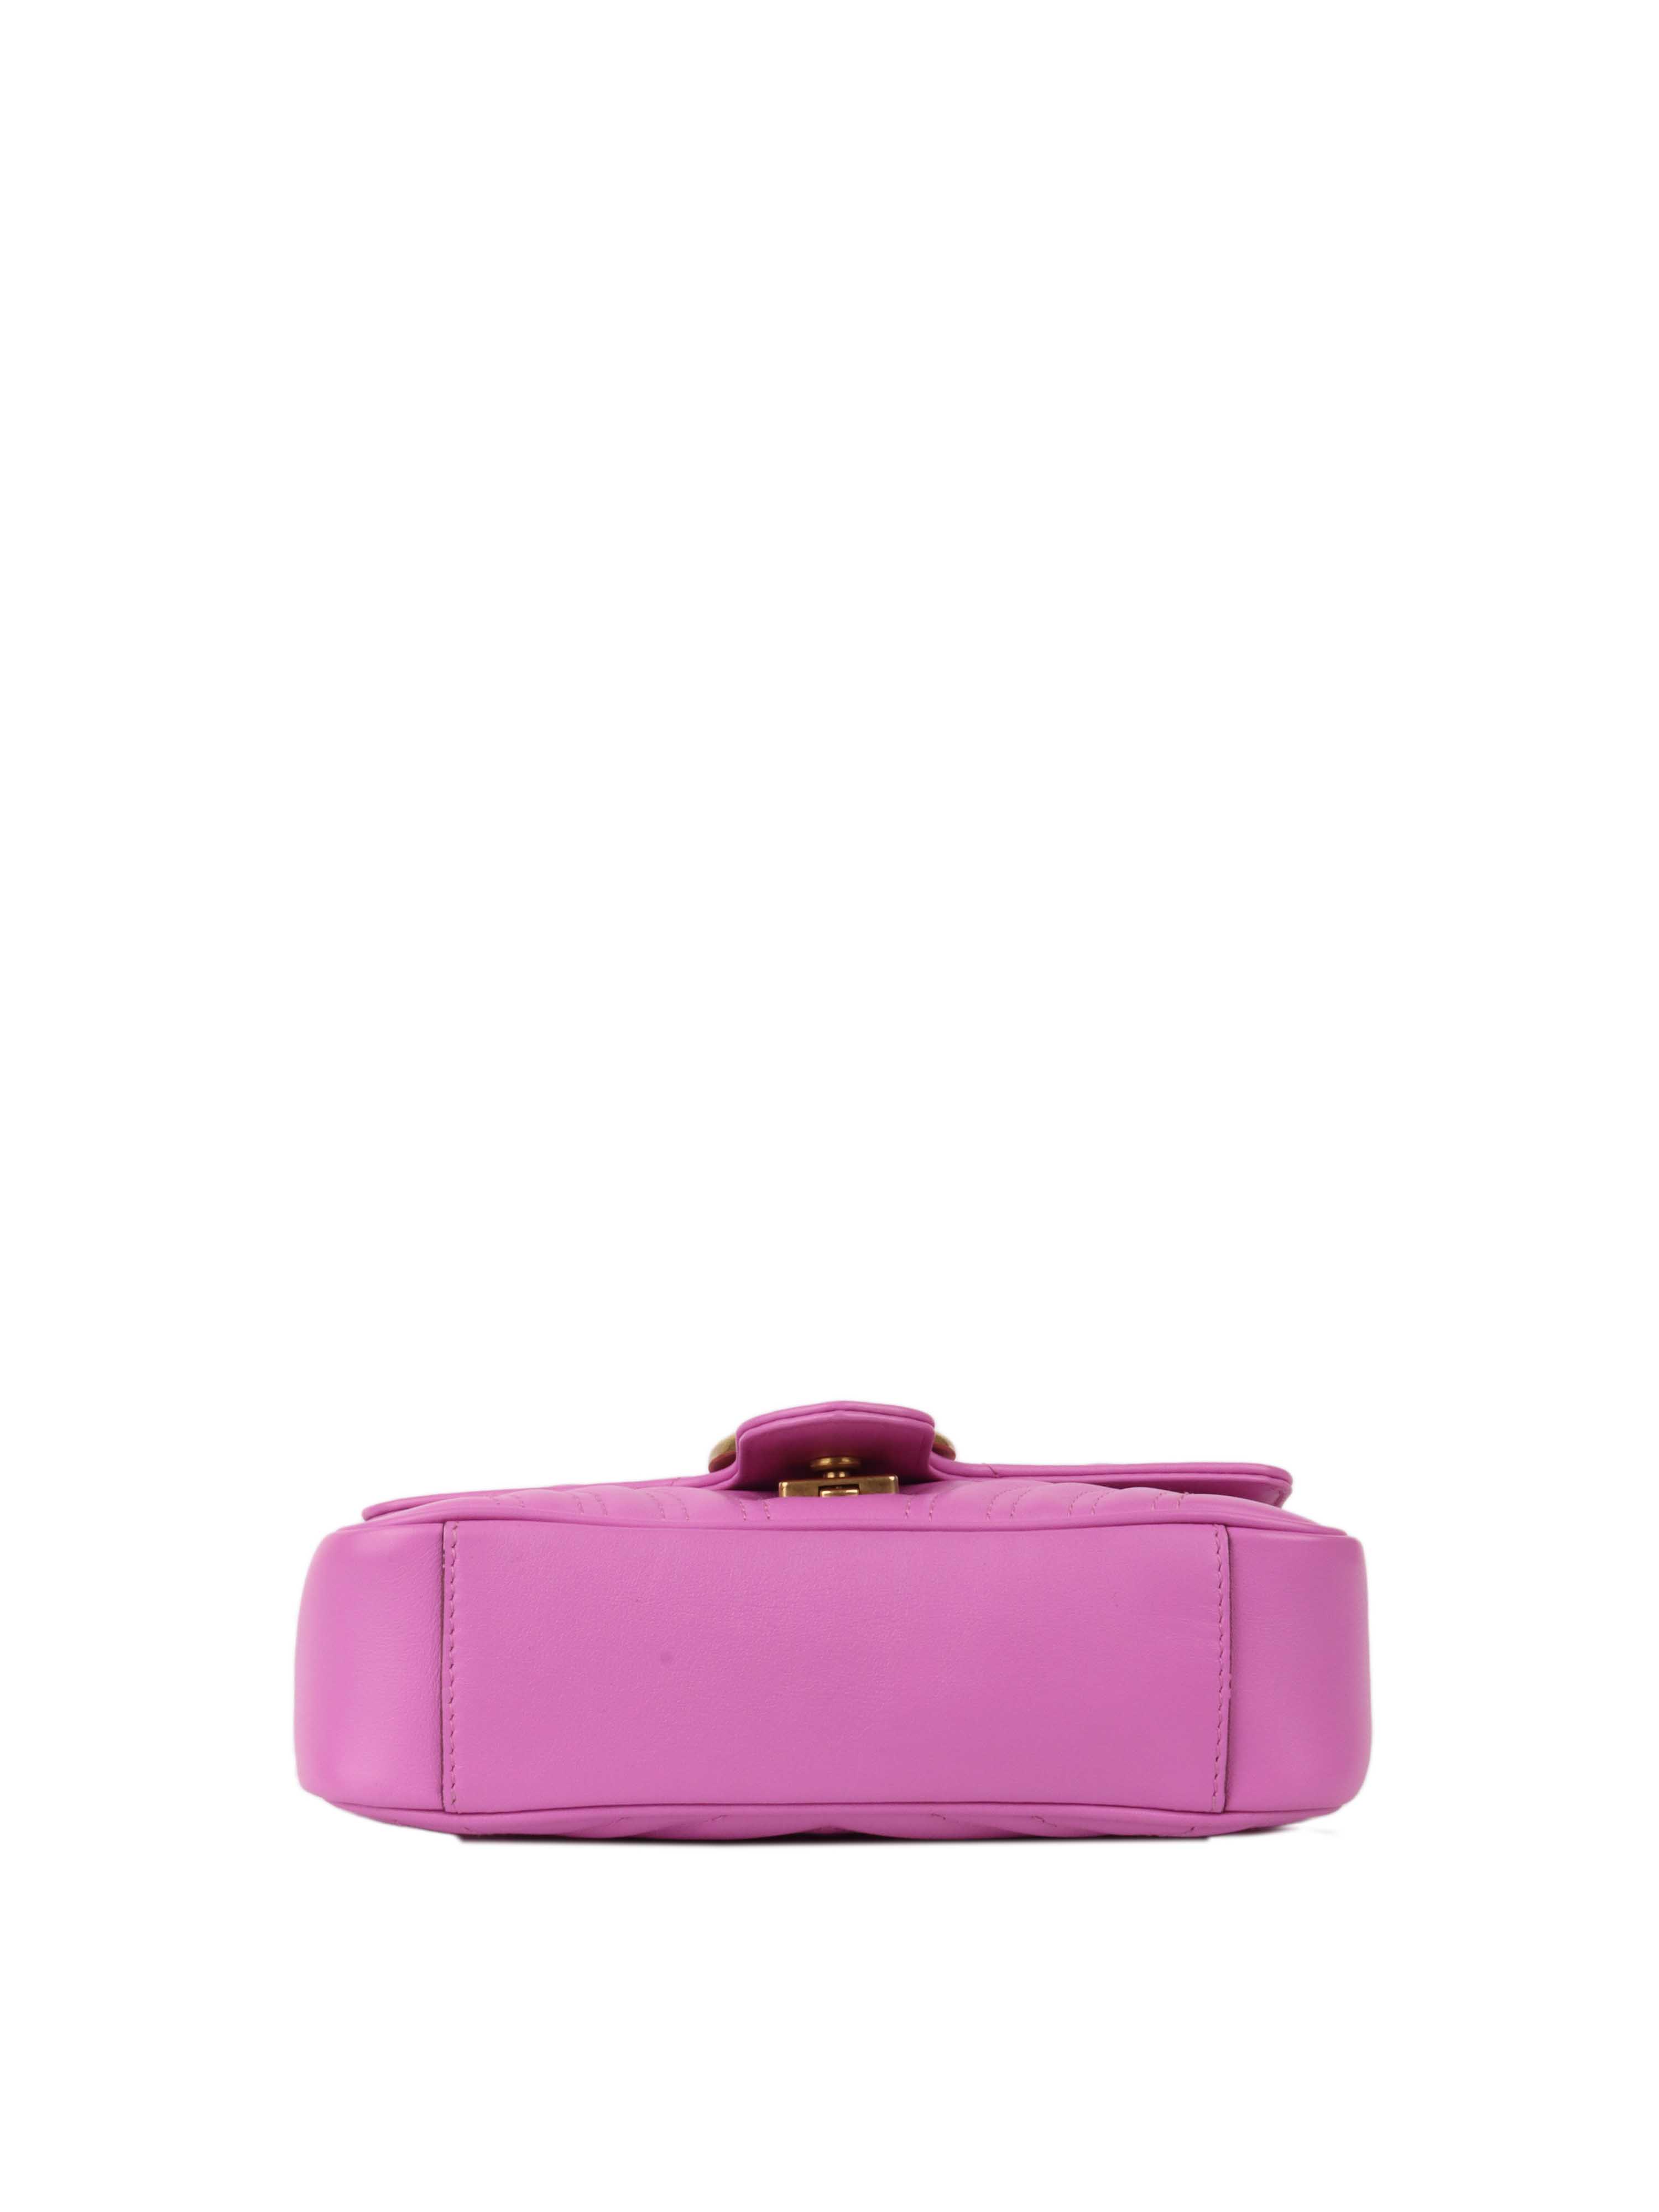 Gucci GG Marmont Matelassé Mini Bag in Pink.